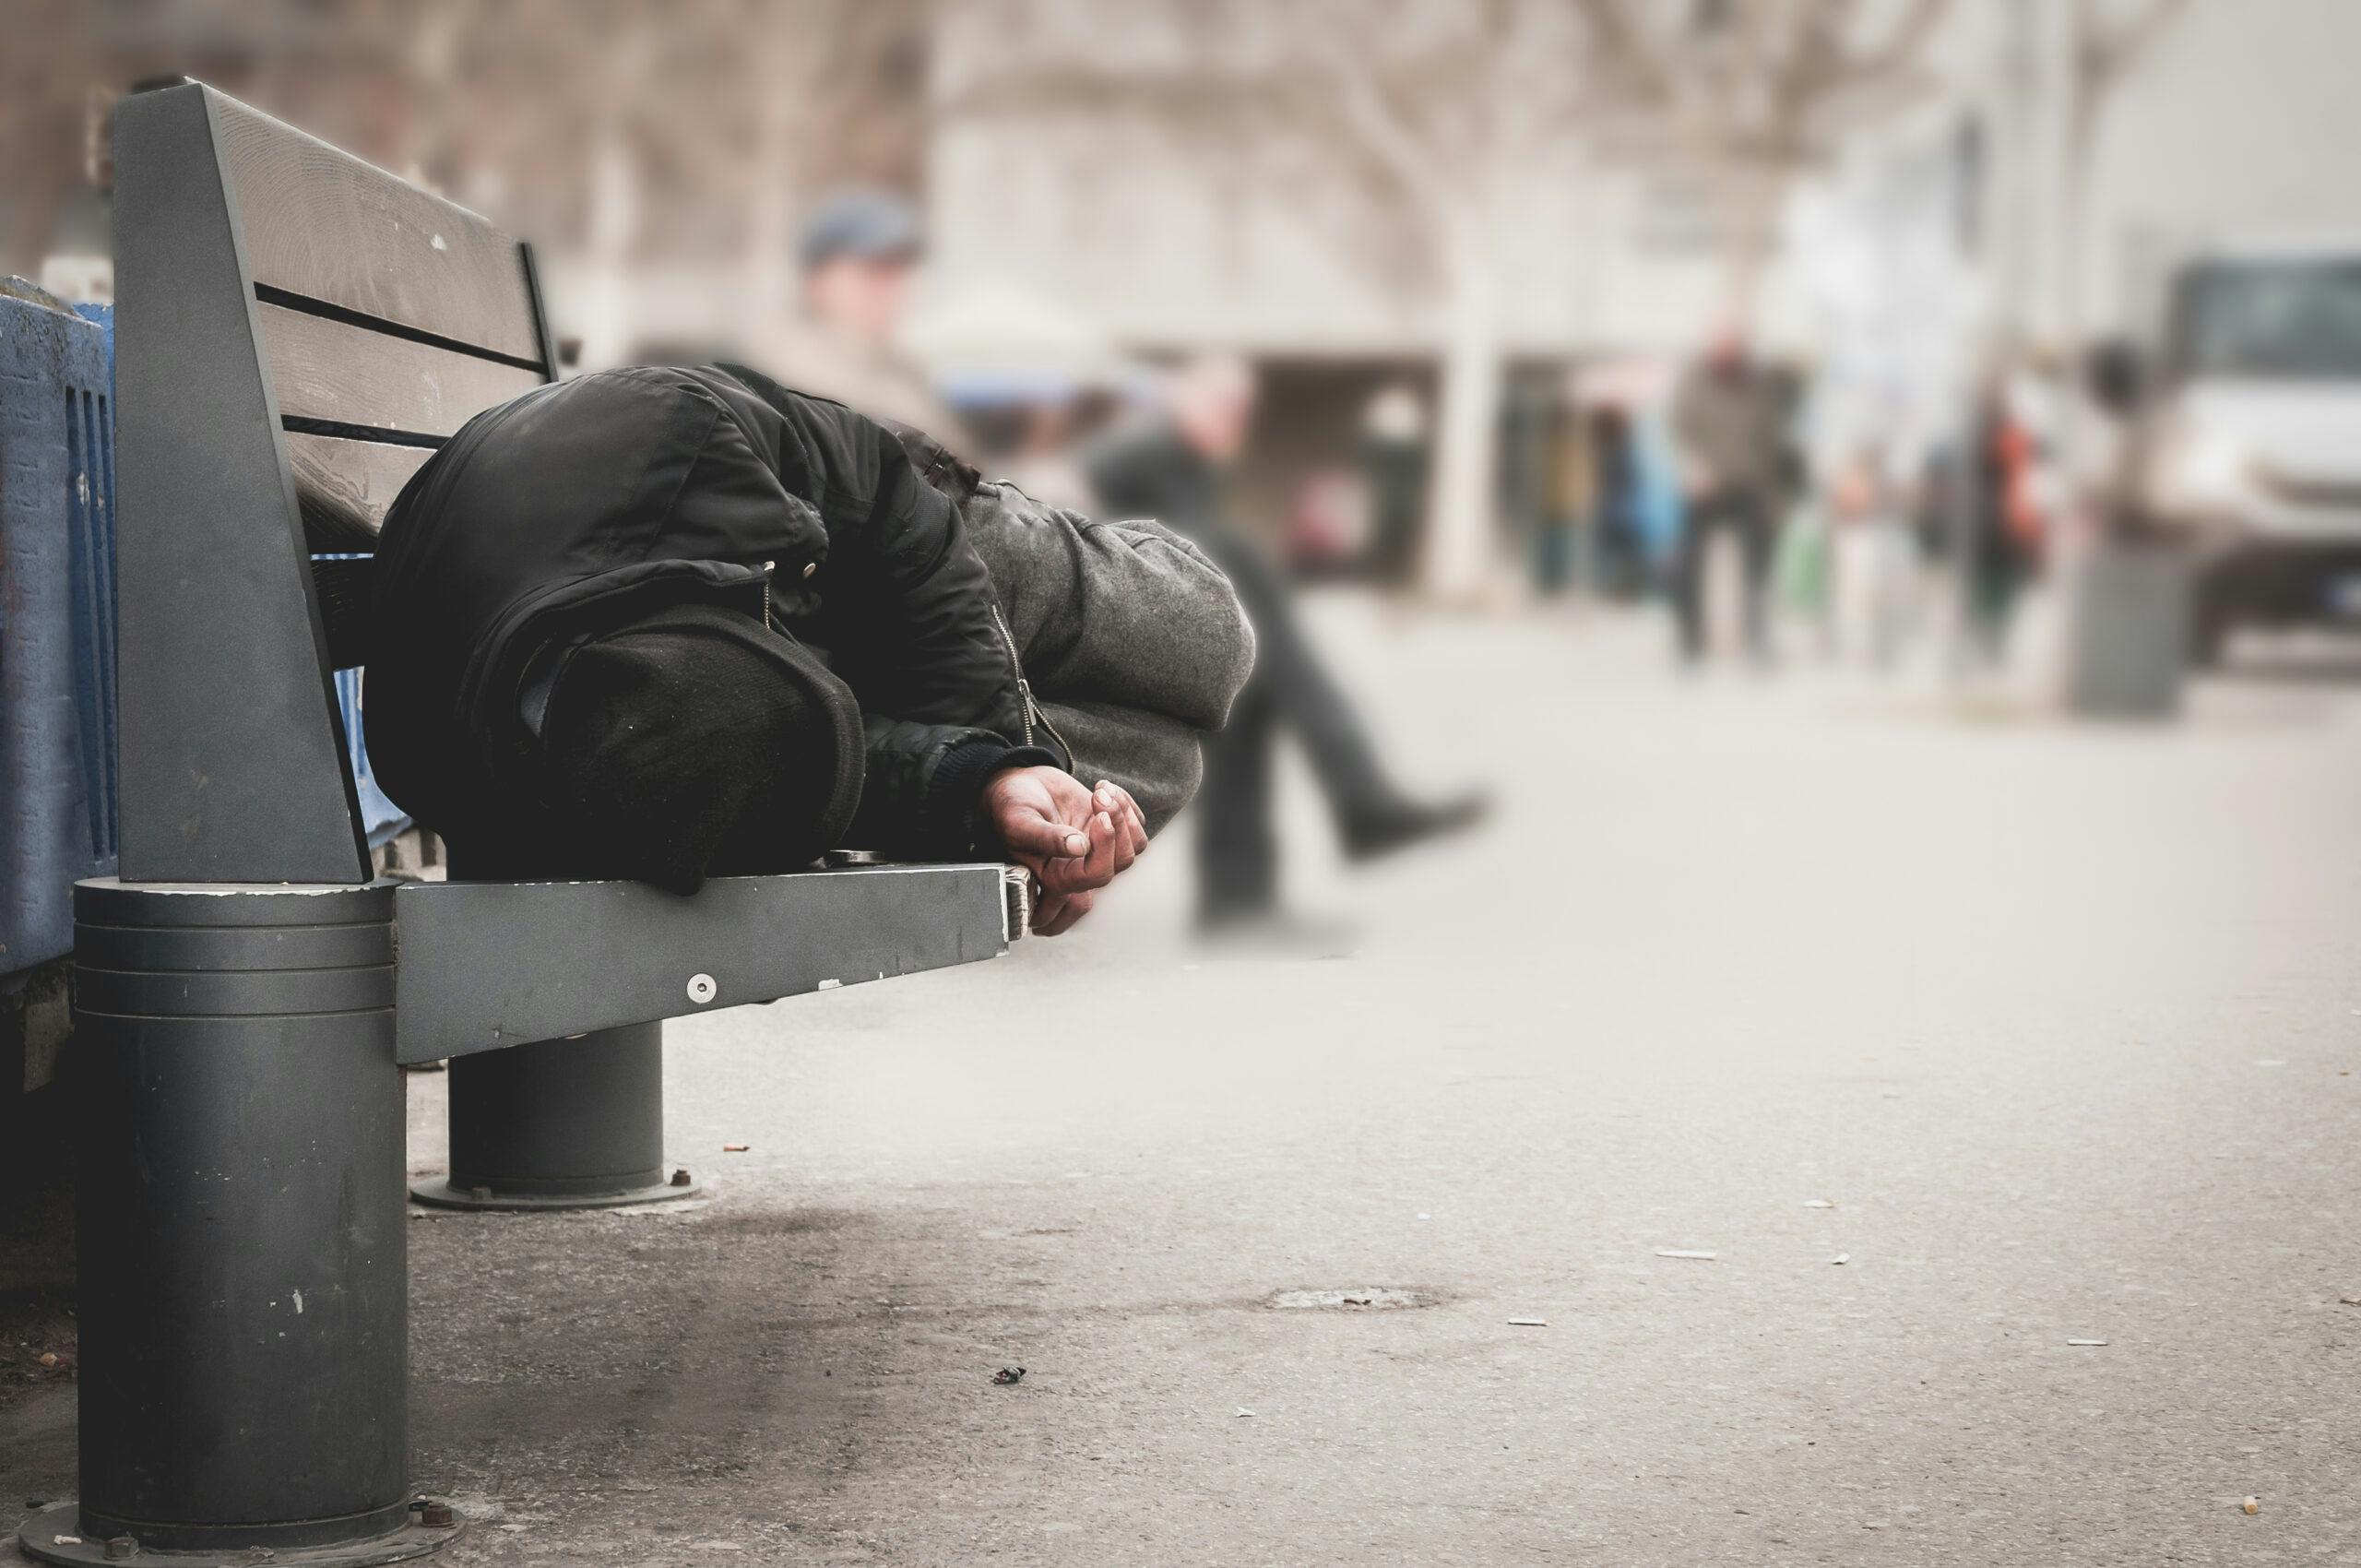 homeless man addict sleeping on bench